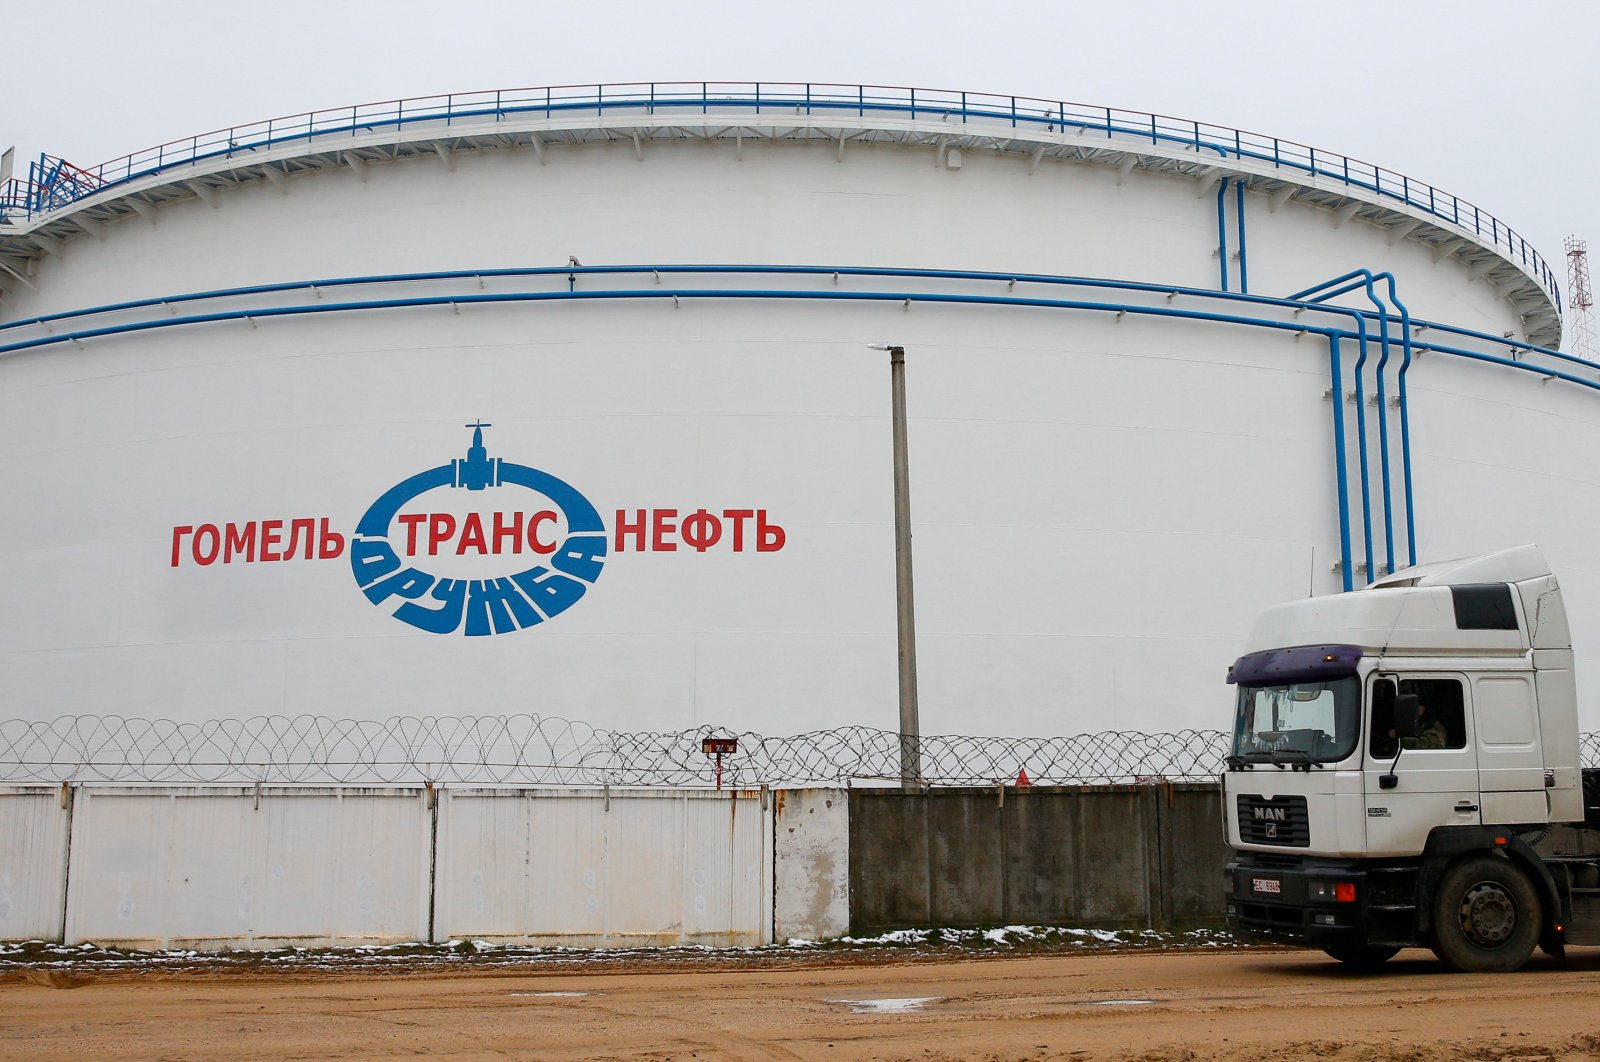 Transneft Rusia menerima permintaan minyak dari Polandia dan Jerman